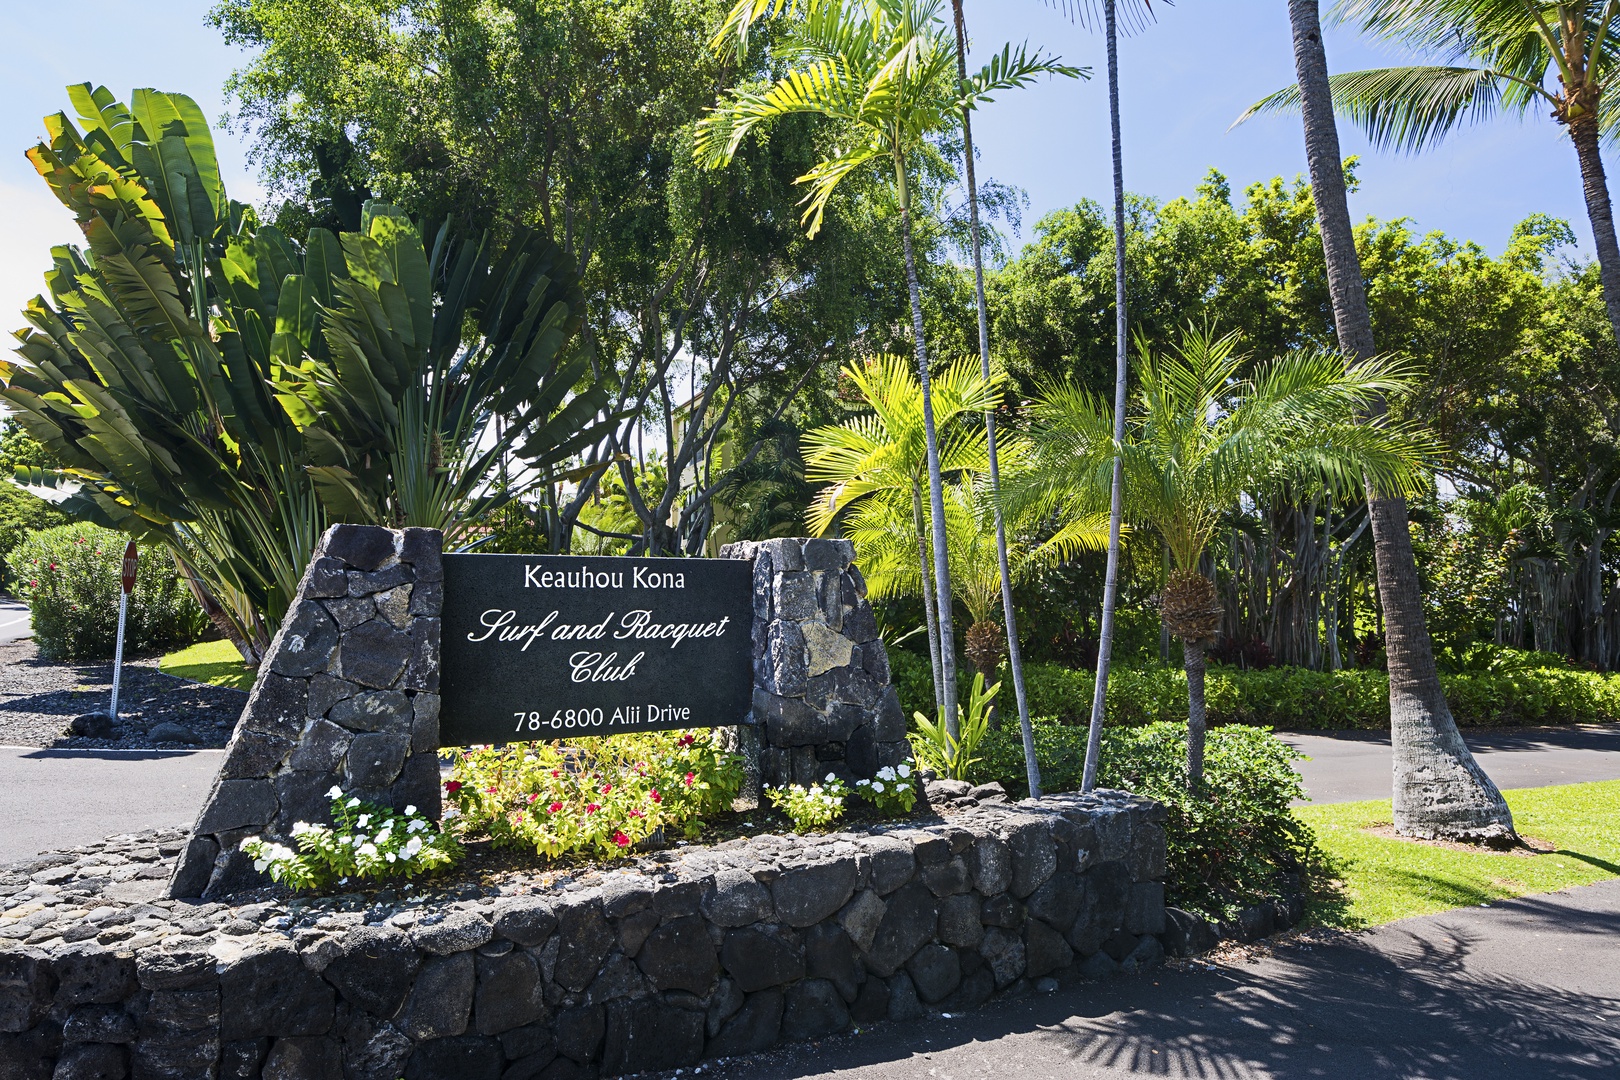 Kailua Kona Vacation Rentals, Keauhou Kona Surf & Racquet 2101 - Surf and Raquet Club Sign